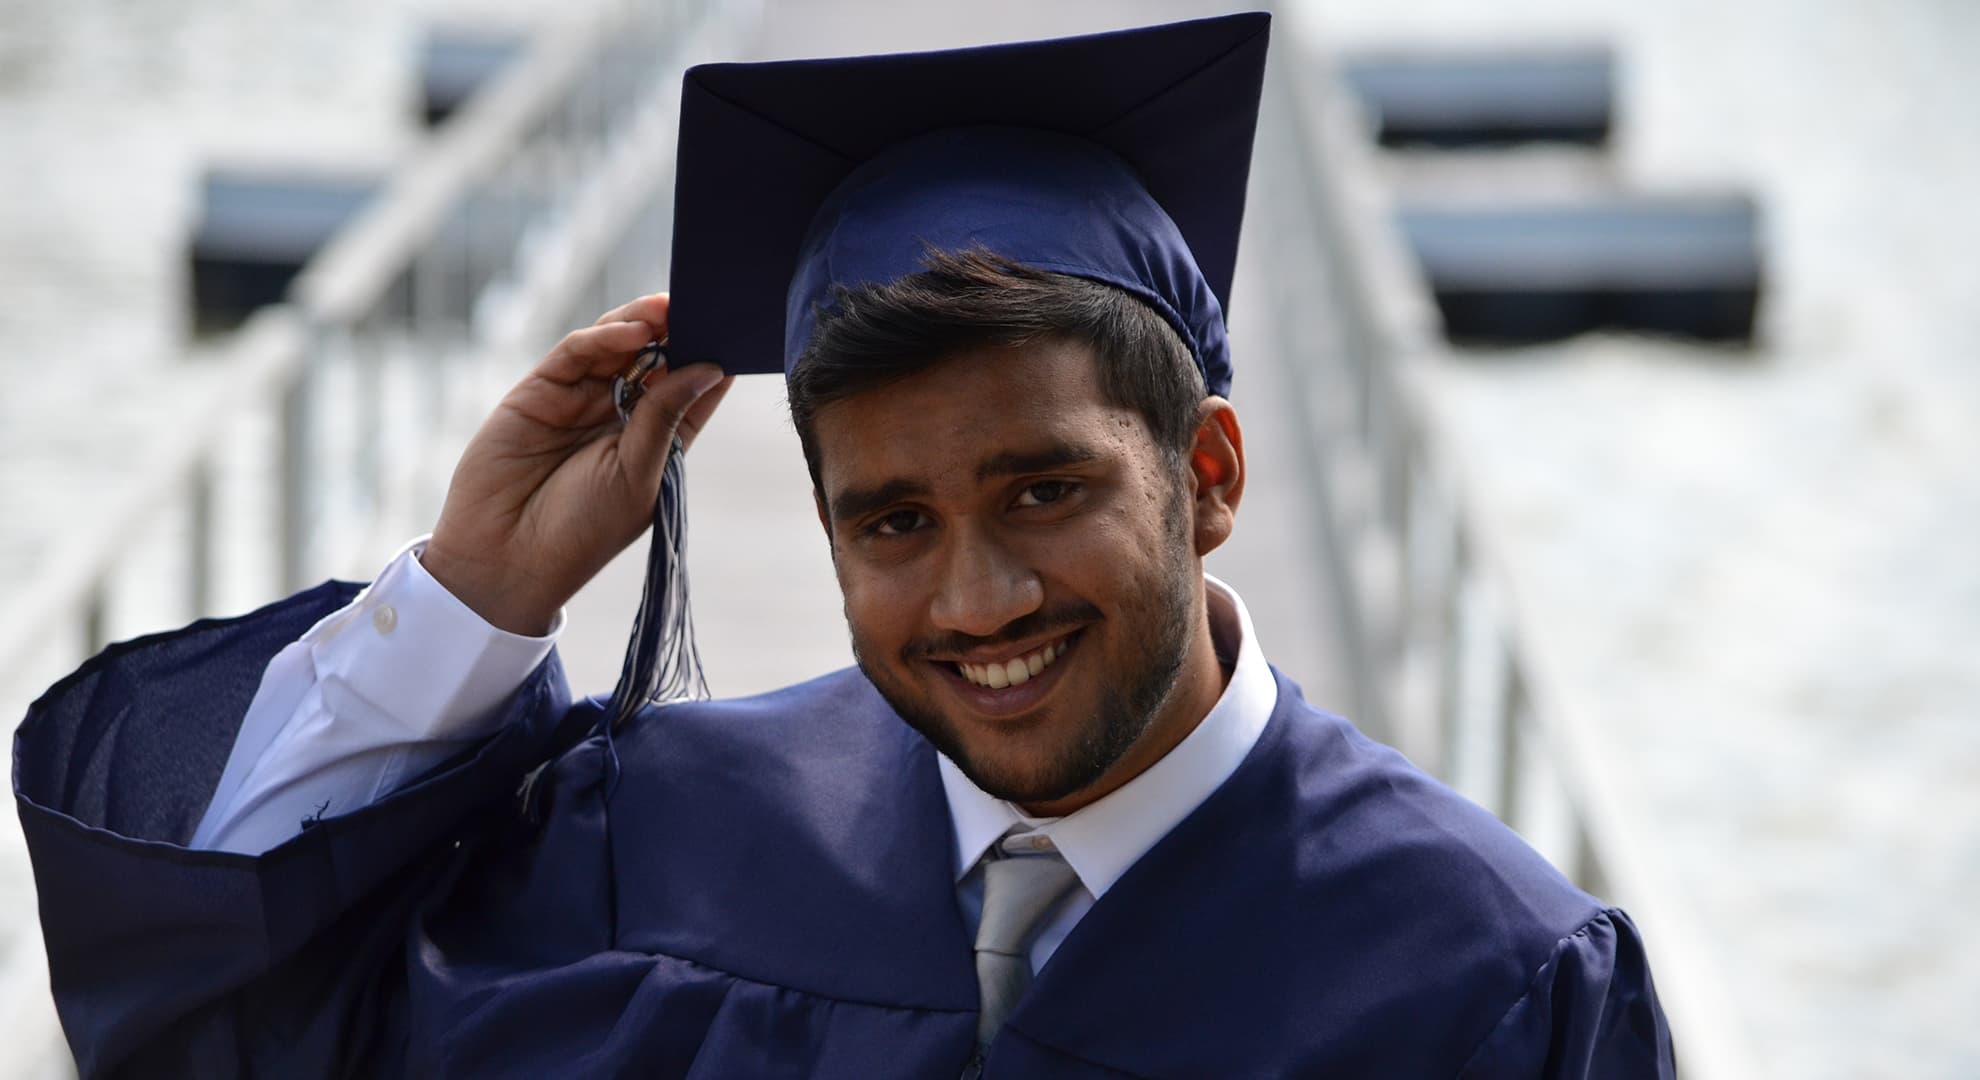 Indian university student in graduation regalia